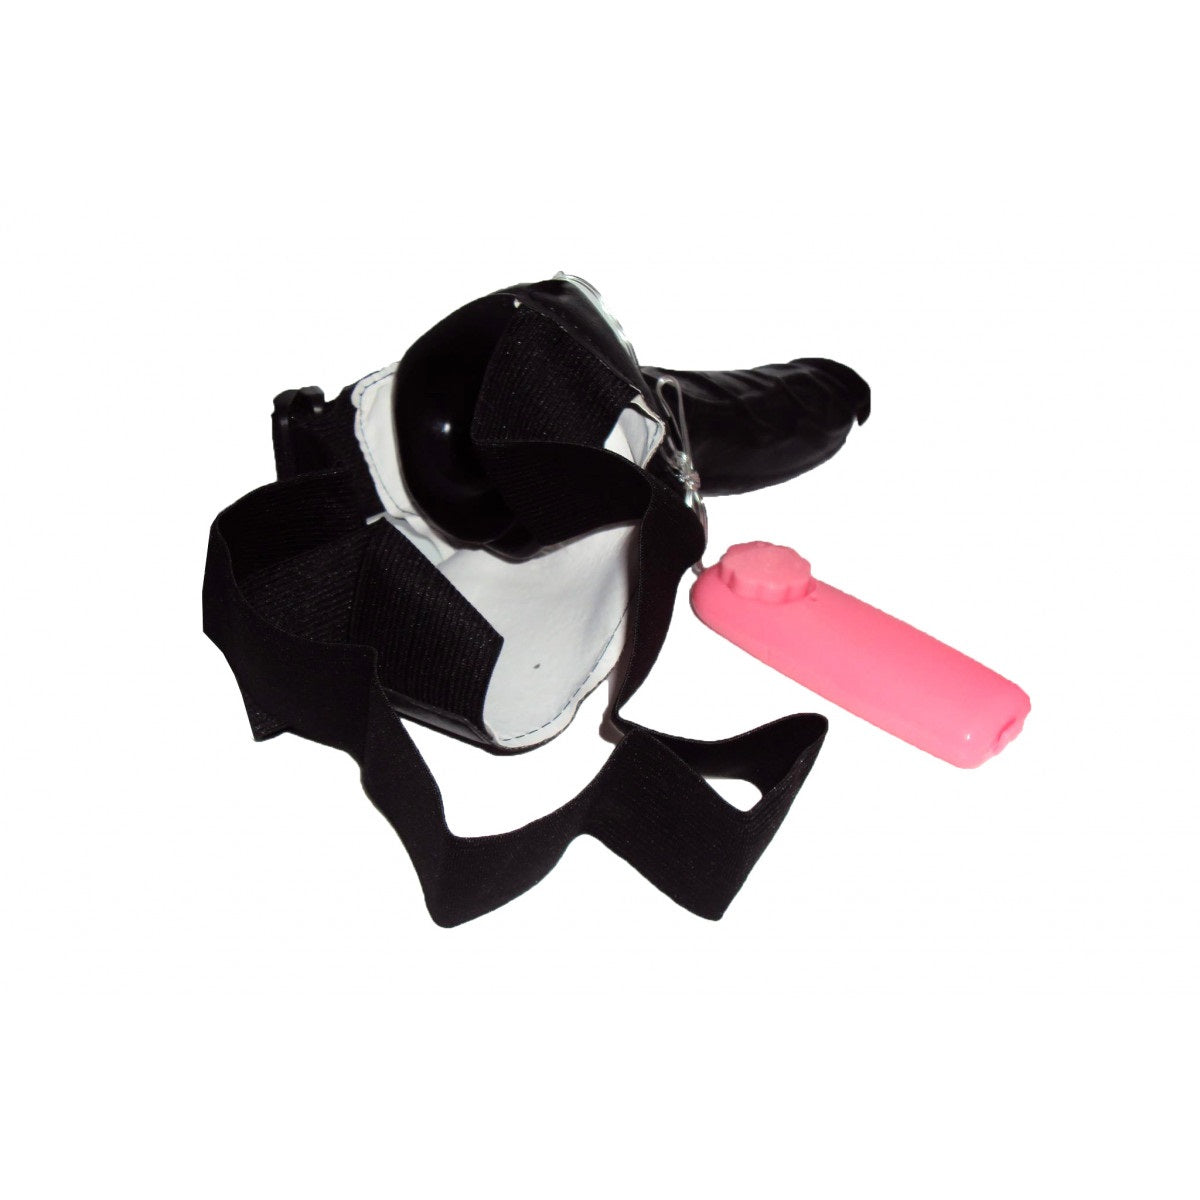 Black Hollow Strap on Dildo With Vibration - Sex Toys